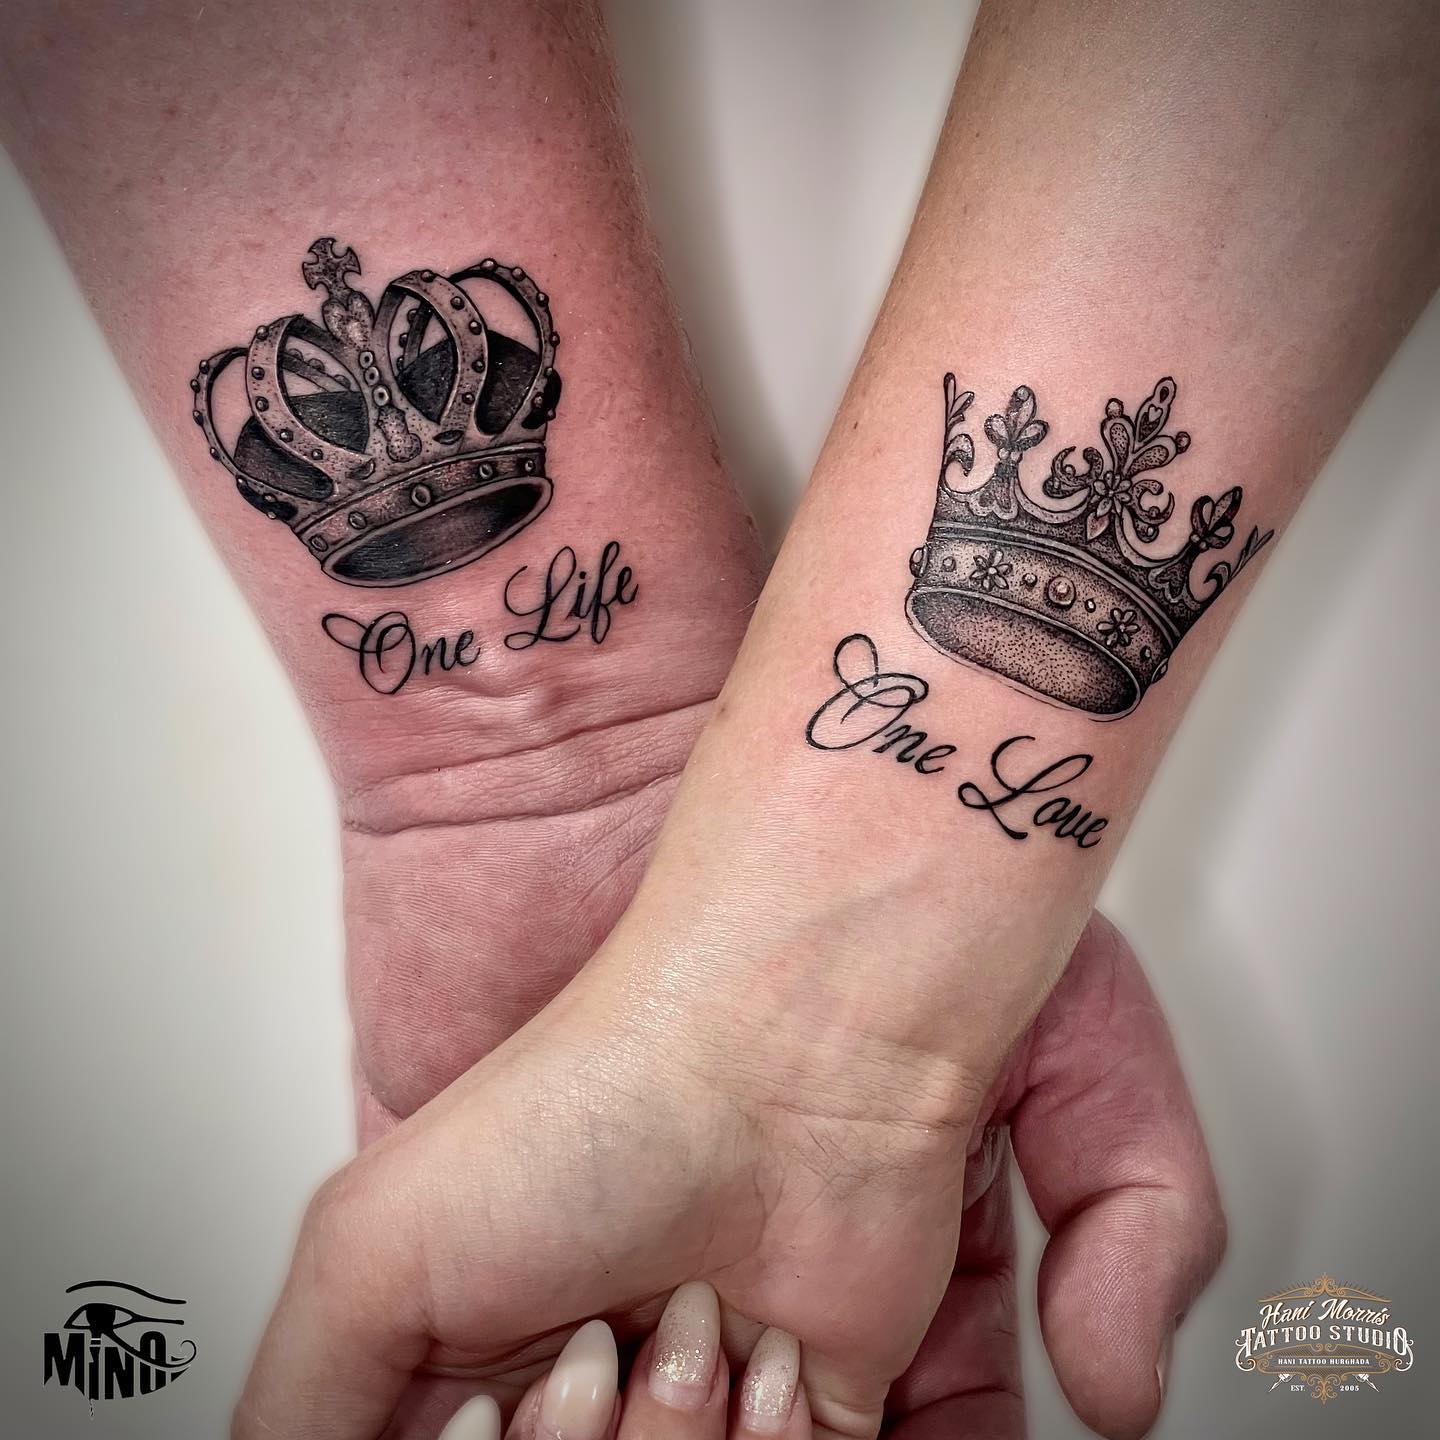 Bizarre Ink Tattoo Studio Edinburgh - Mark & Sabina's, Queen & King tattoos  ! A couple that's always a pleasure to have in. John. | Facebook